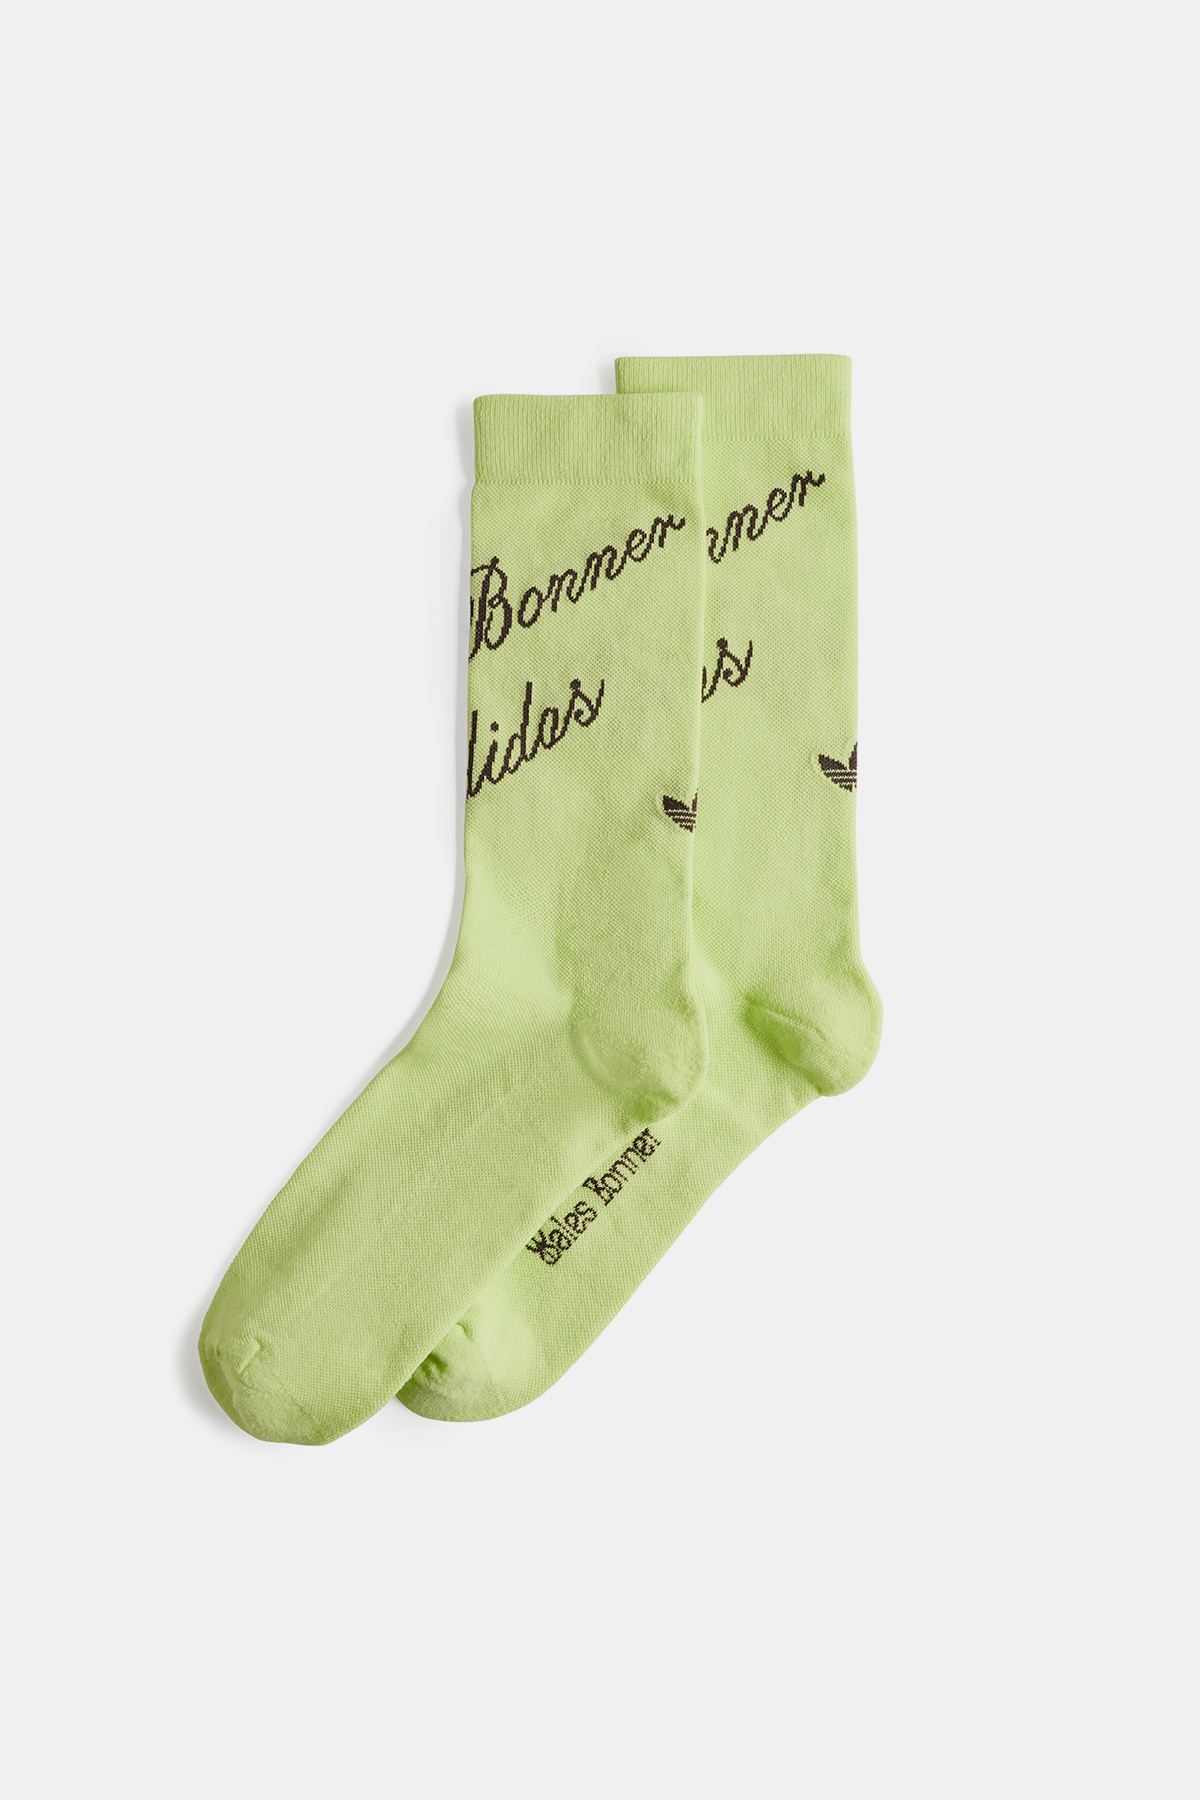 adidas x Wales Bonner Short Socks - Semi Frozen Yellow